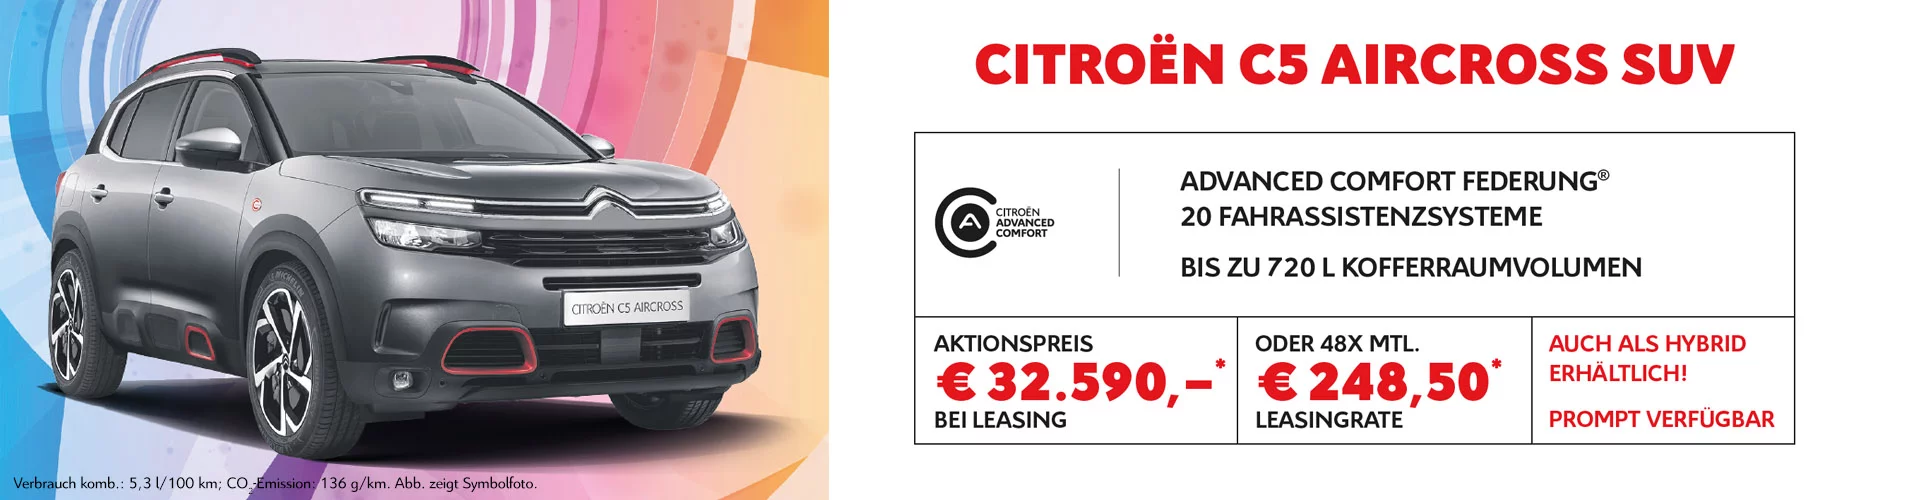 Citroen C5 Aicross